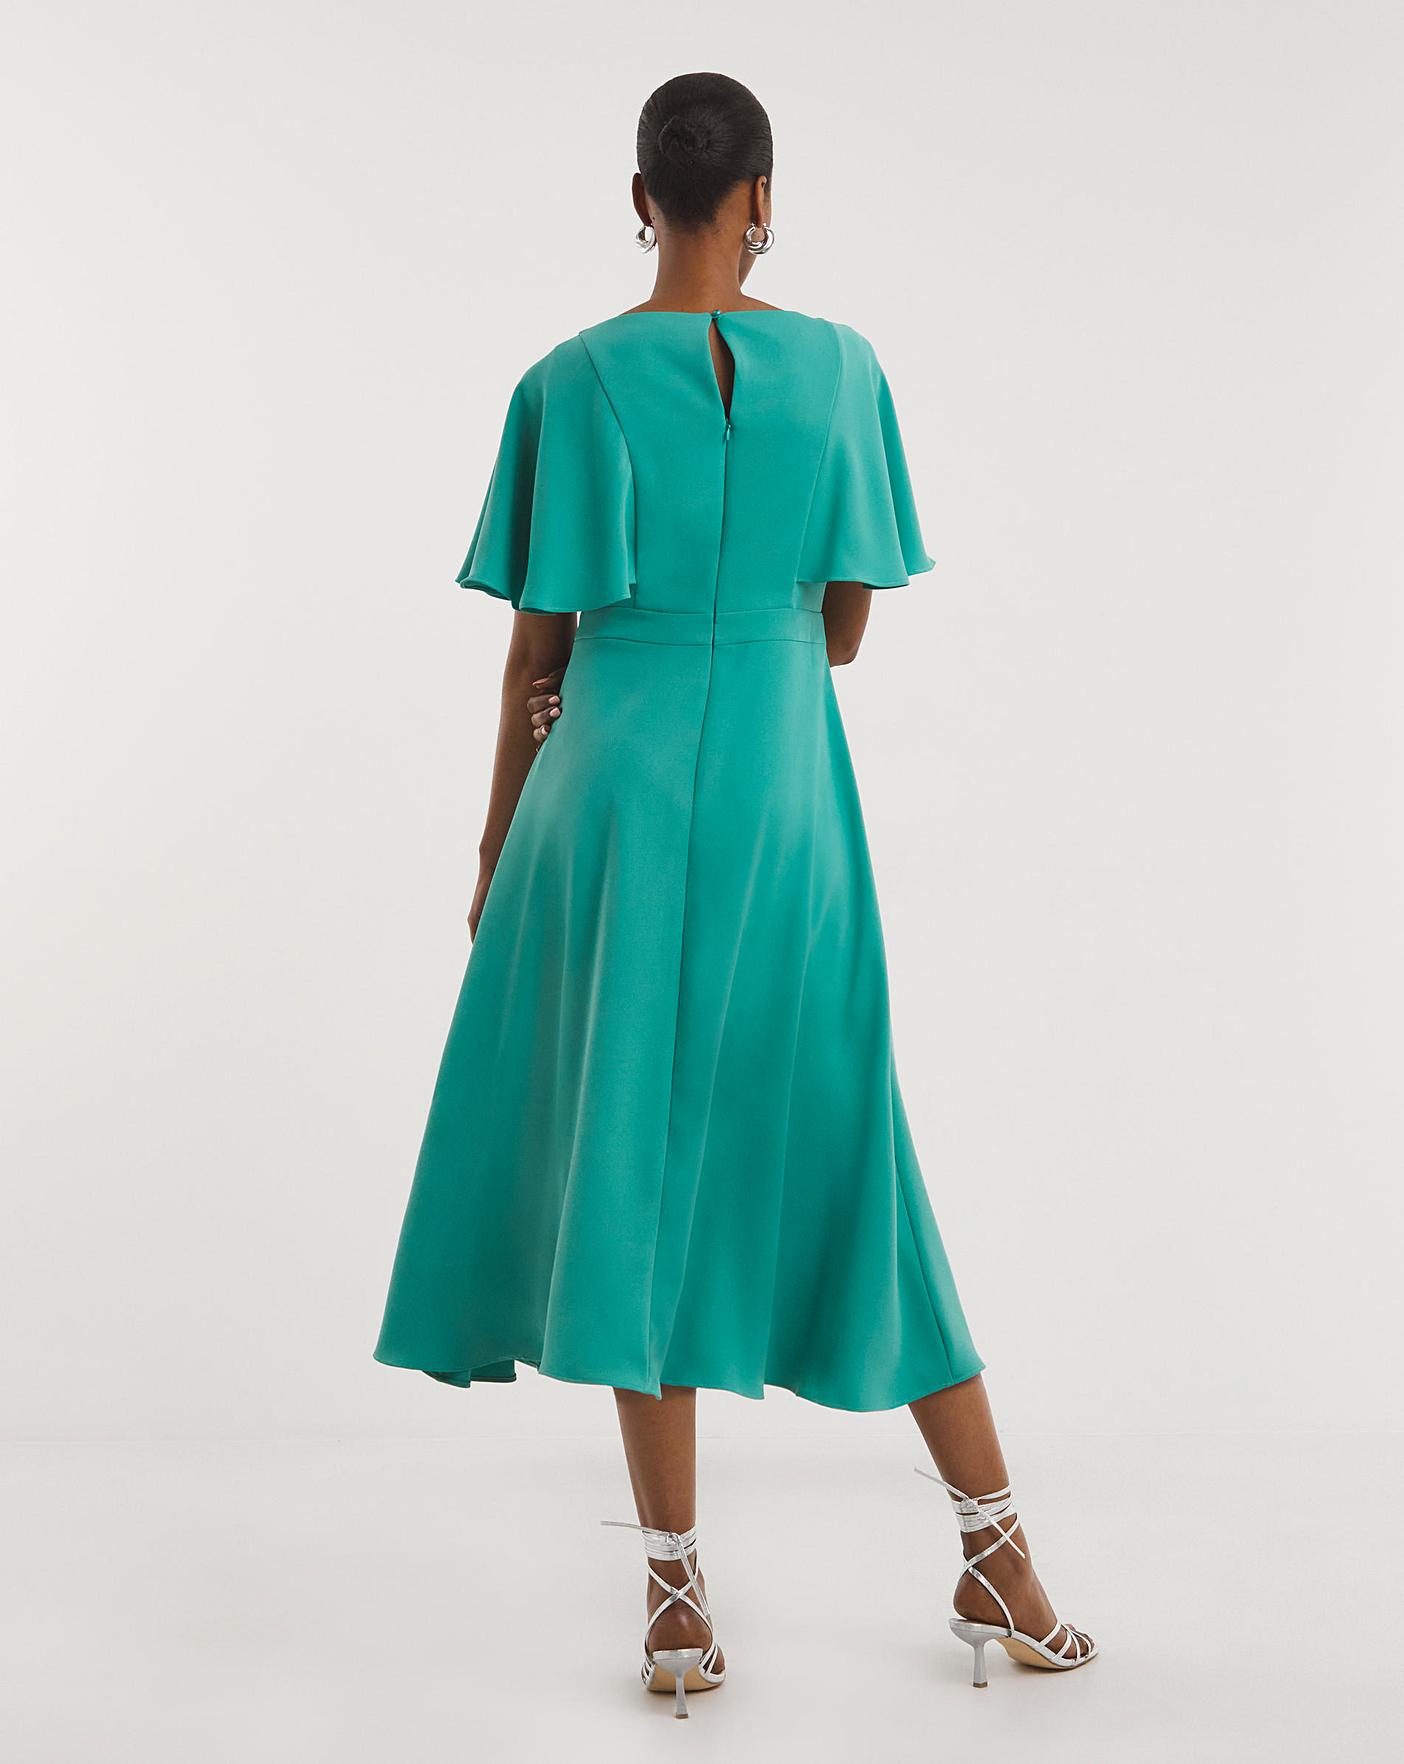 Joanna Hope Green Angel Sleeve Dress | Marisota